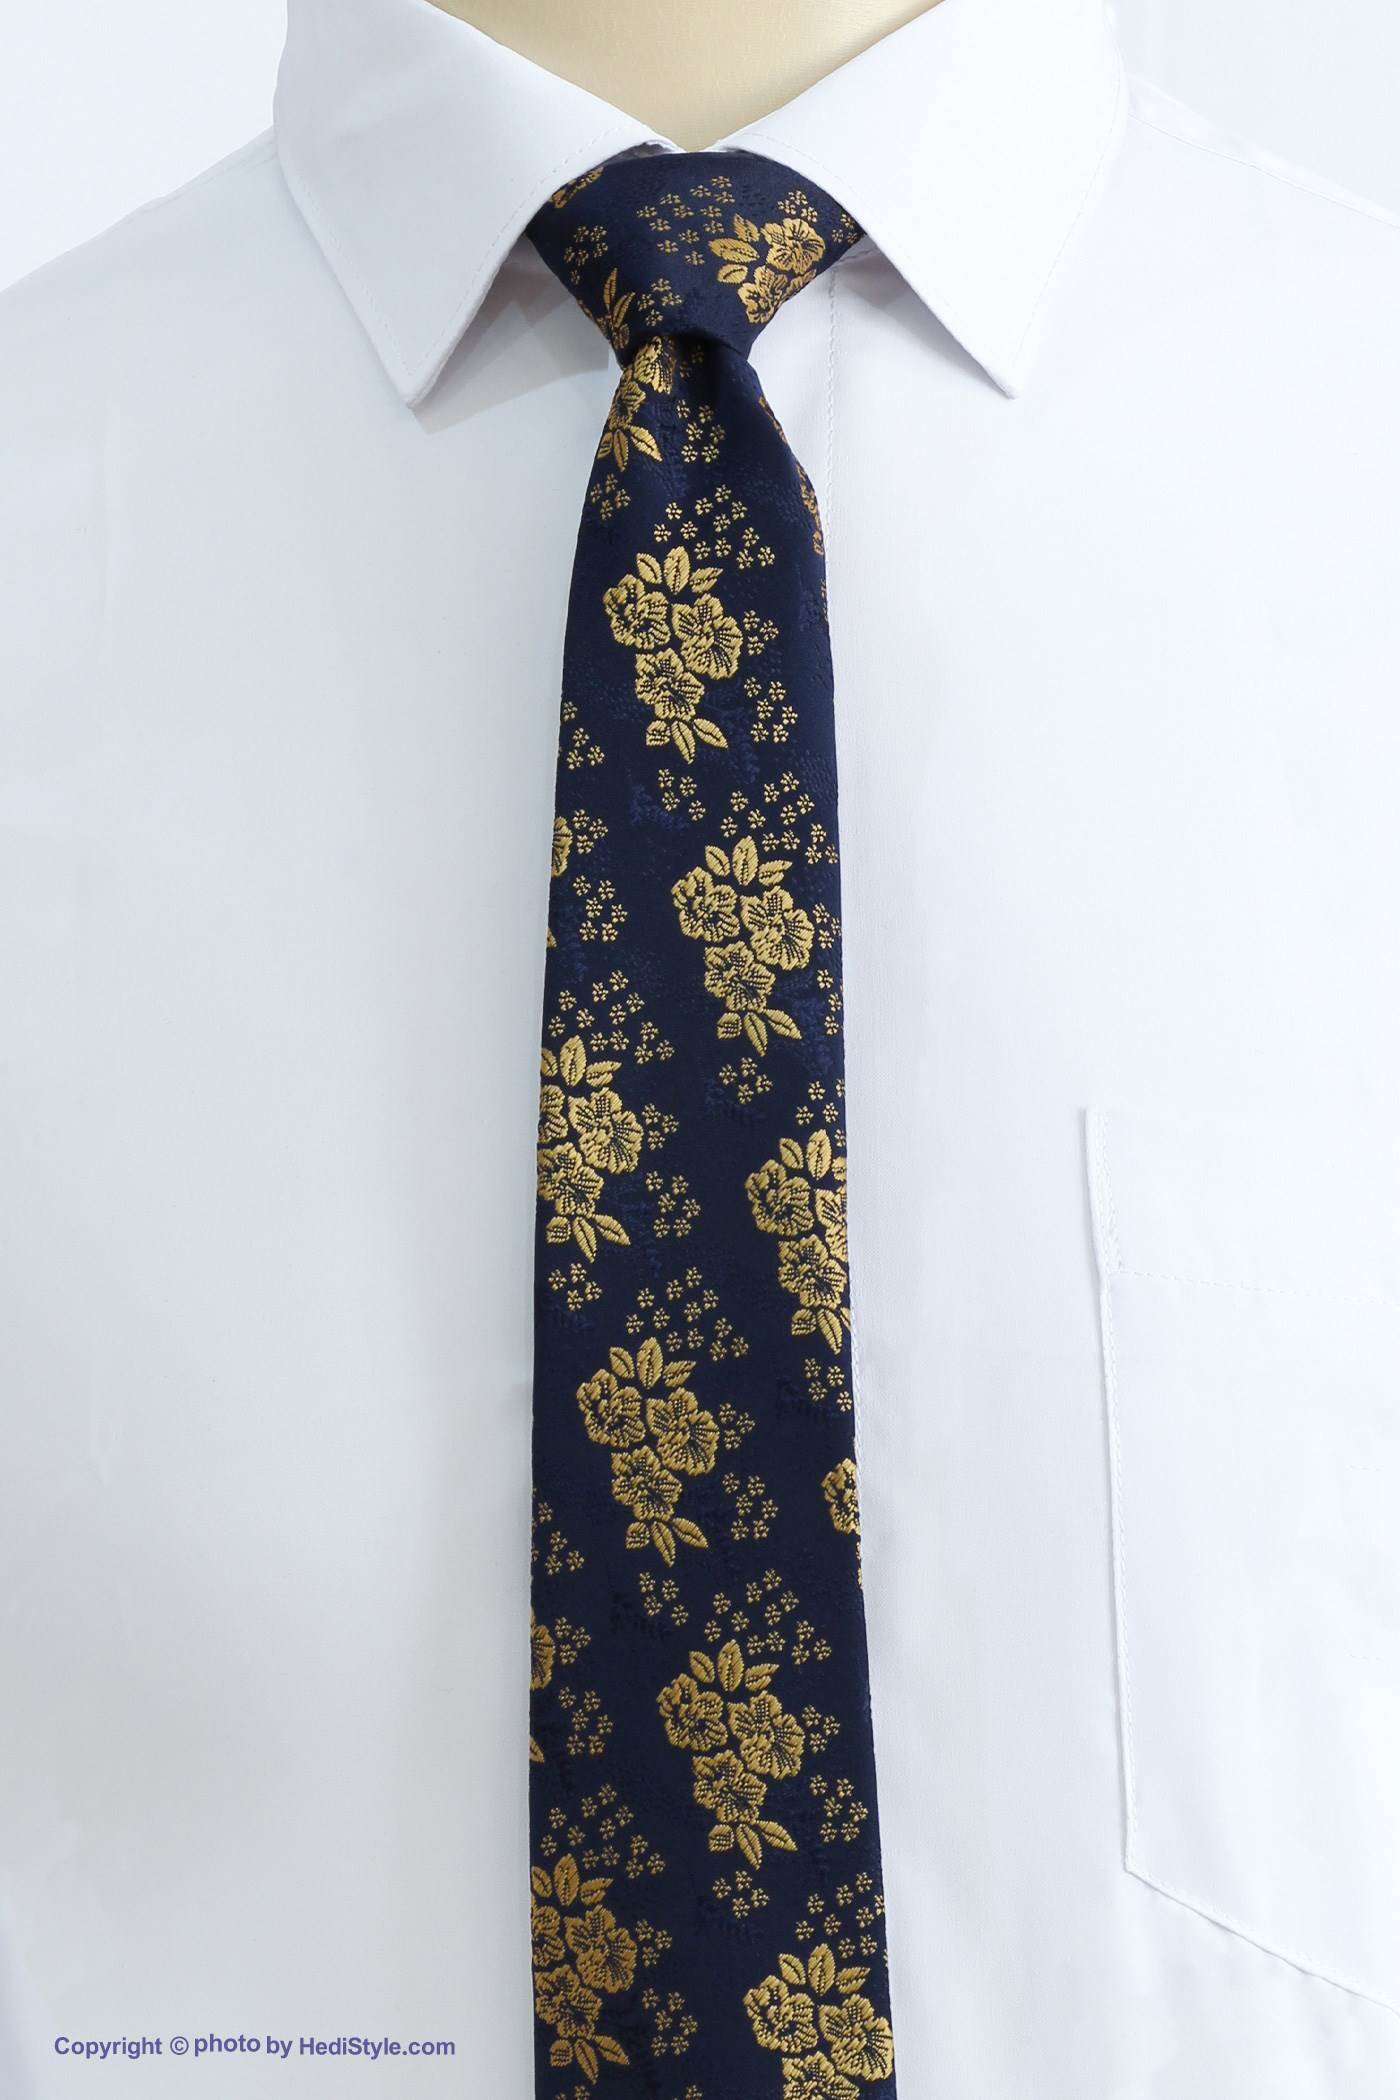 Tie and skin set of golden crimson flower design code T01-07-1246A